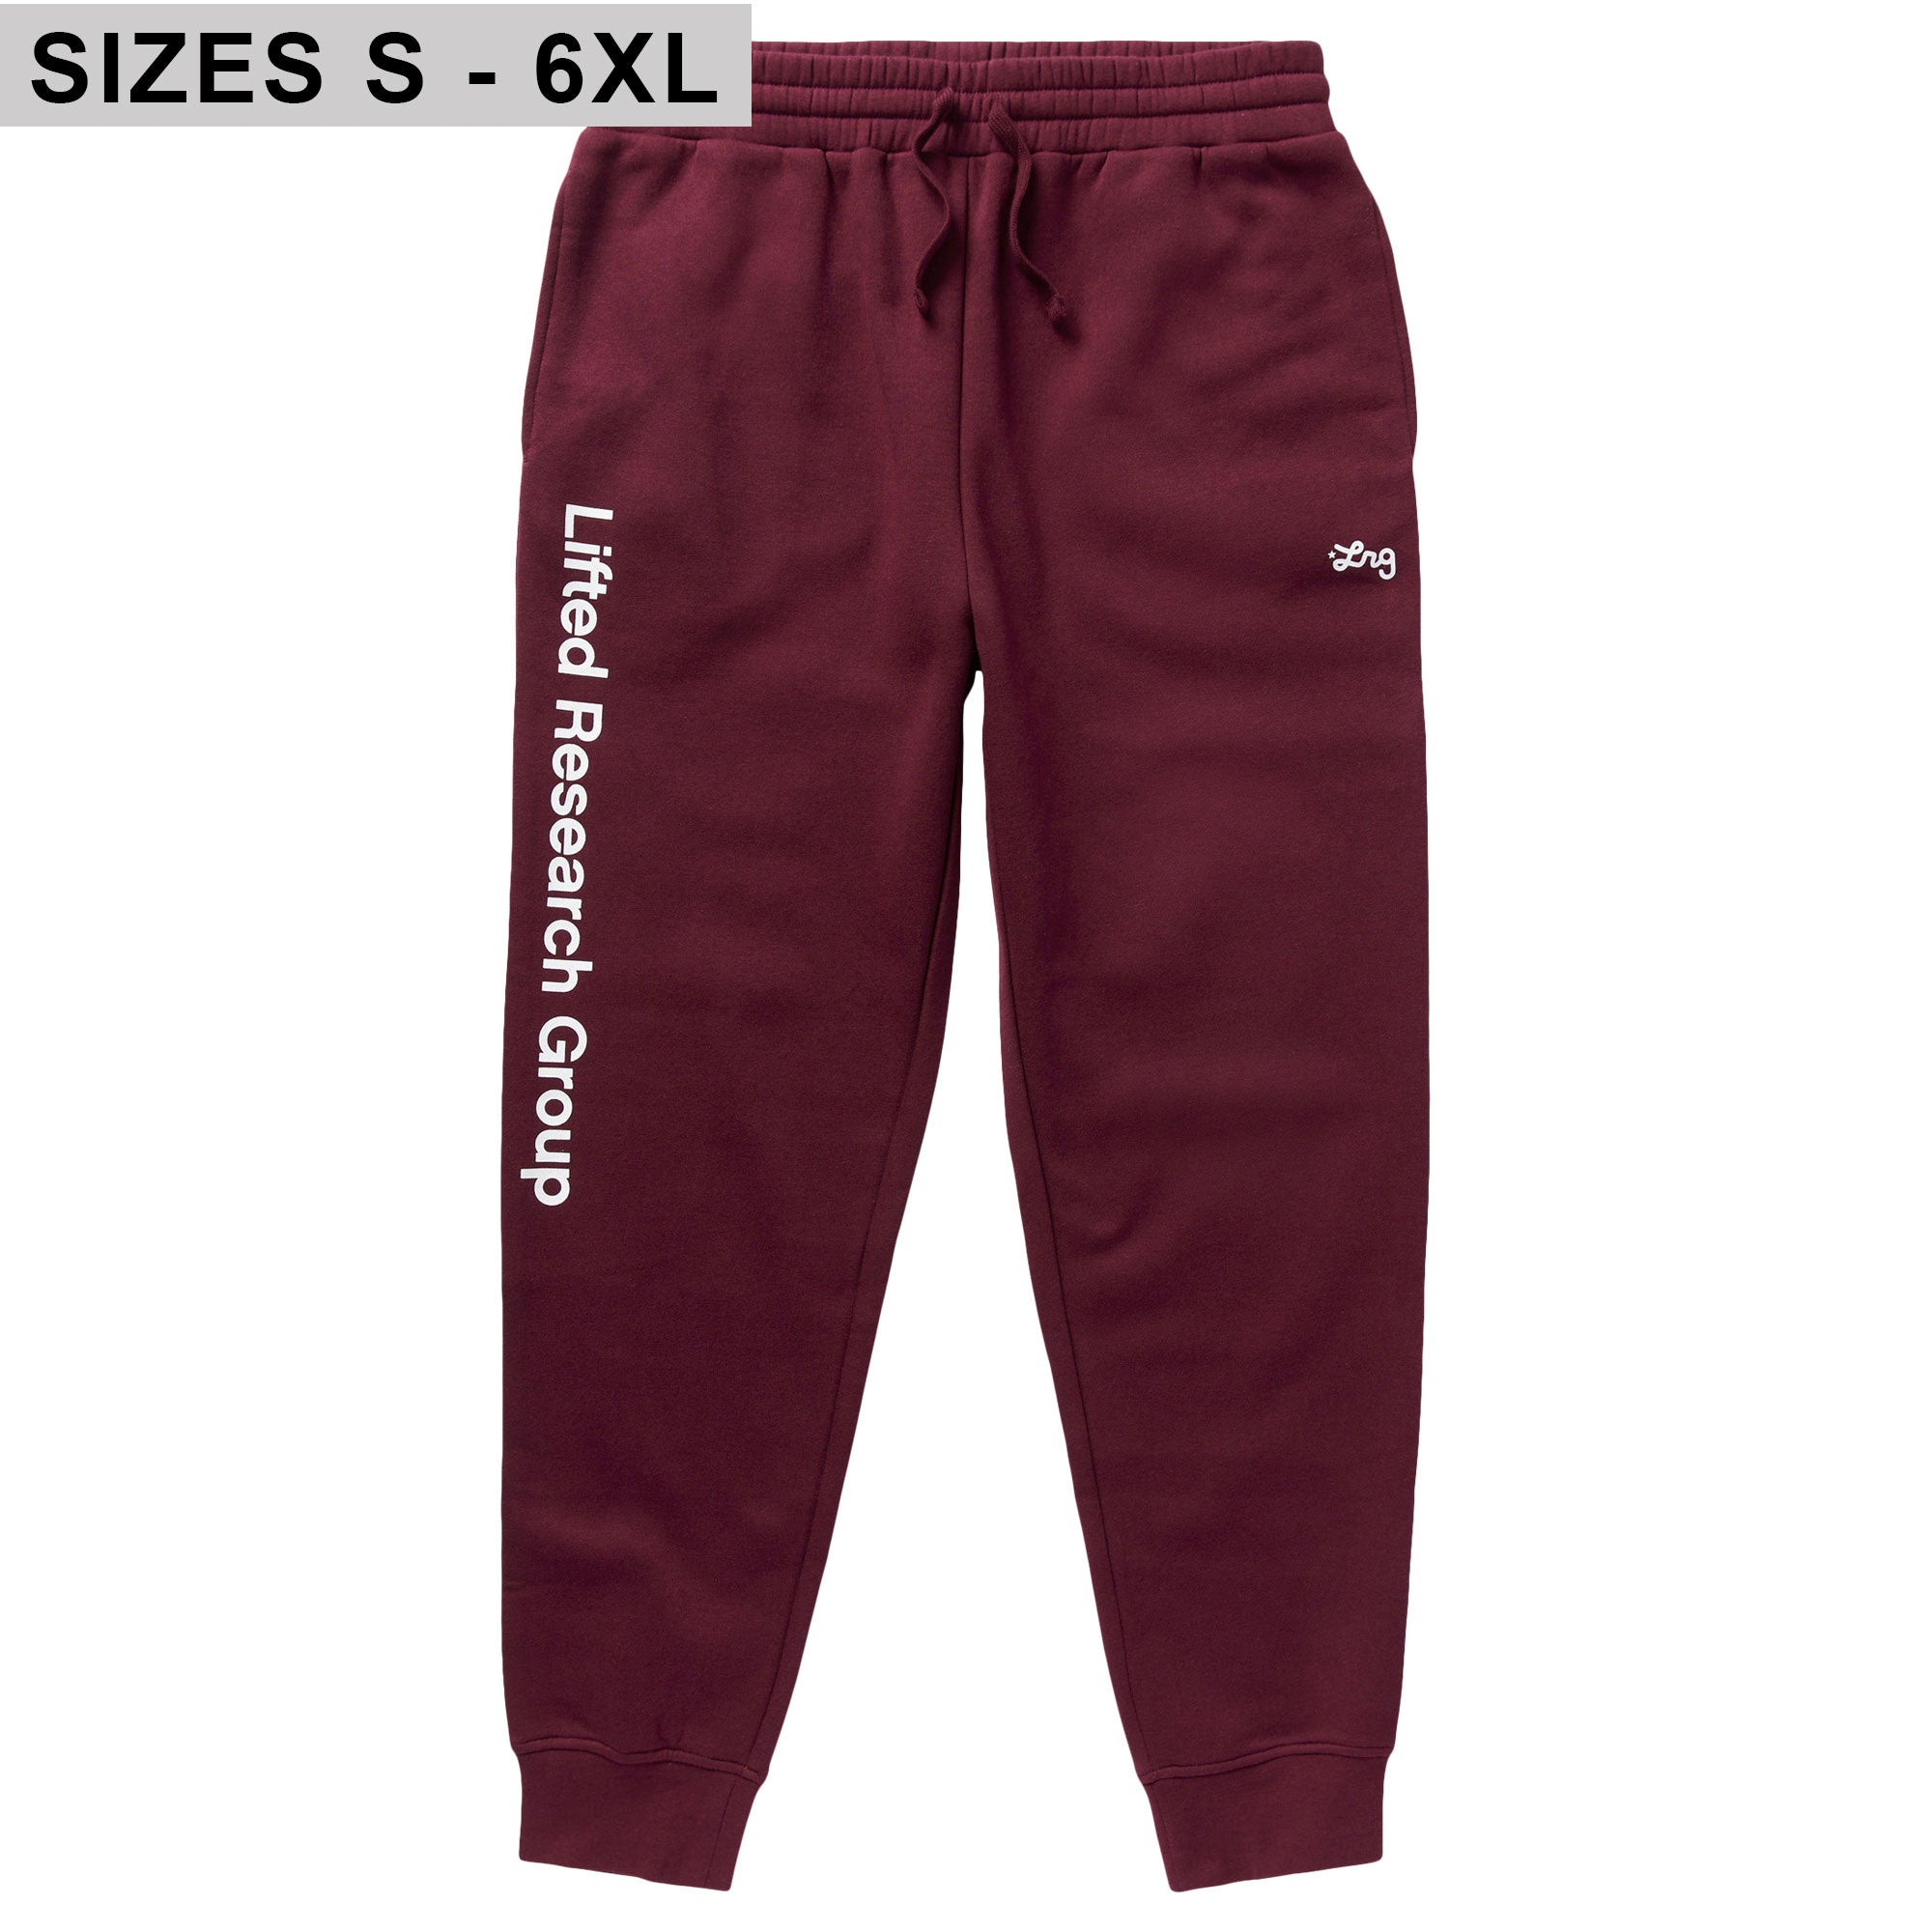 Buy the SJB Active Women Burgundy Athletic Pants XL